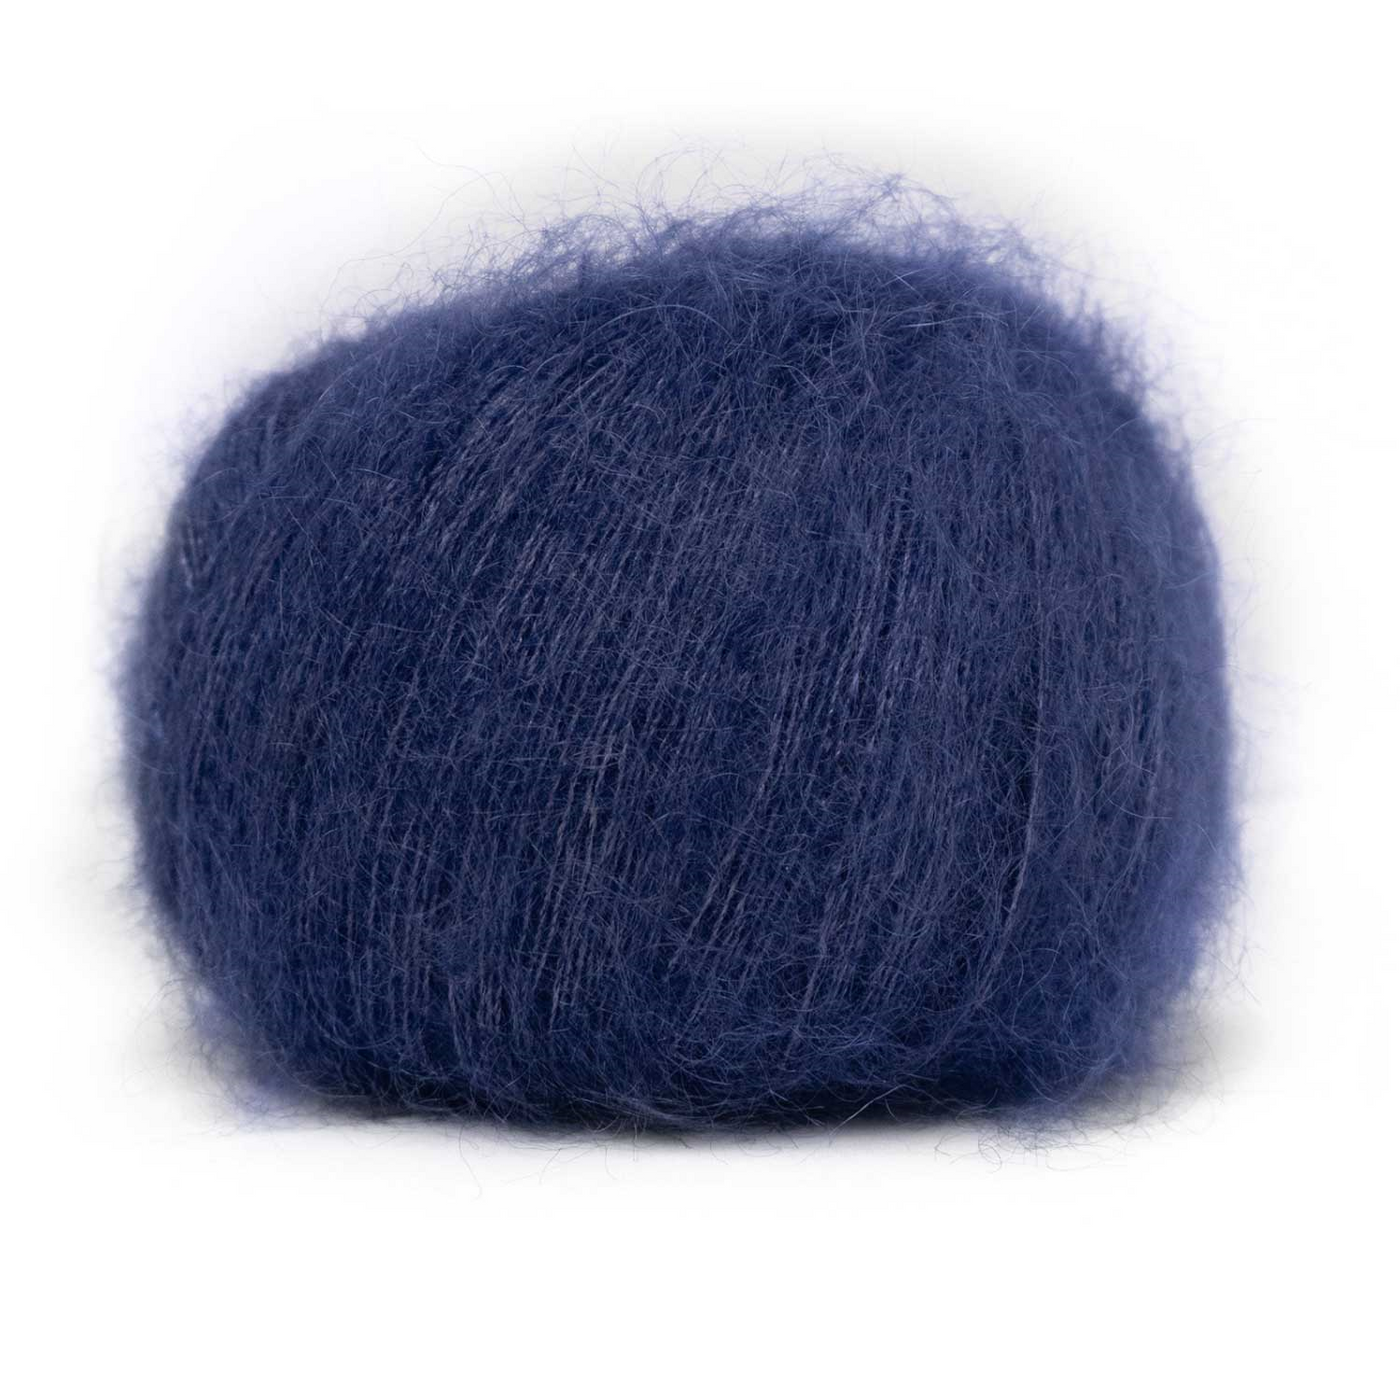 Pascuali Mohair Bliss Lace Silk Knitting Yarn